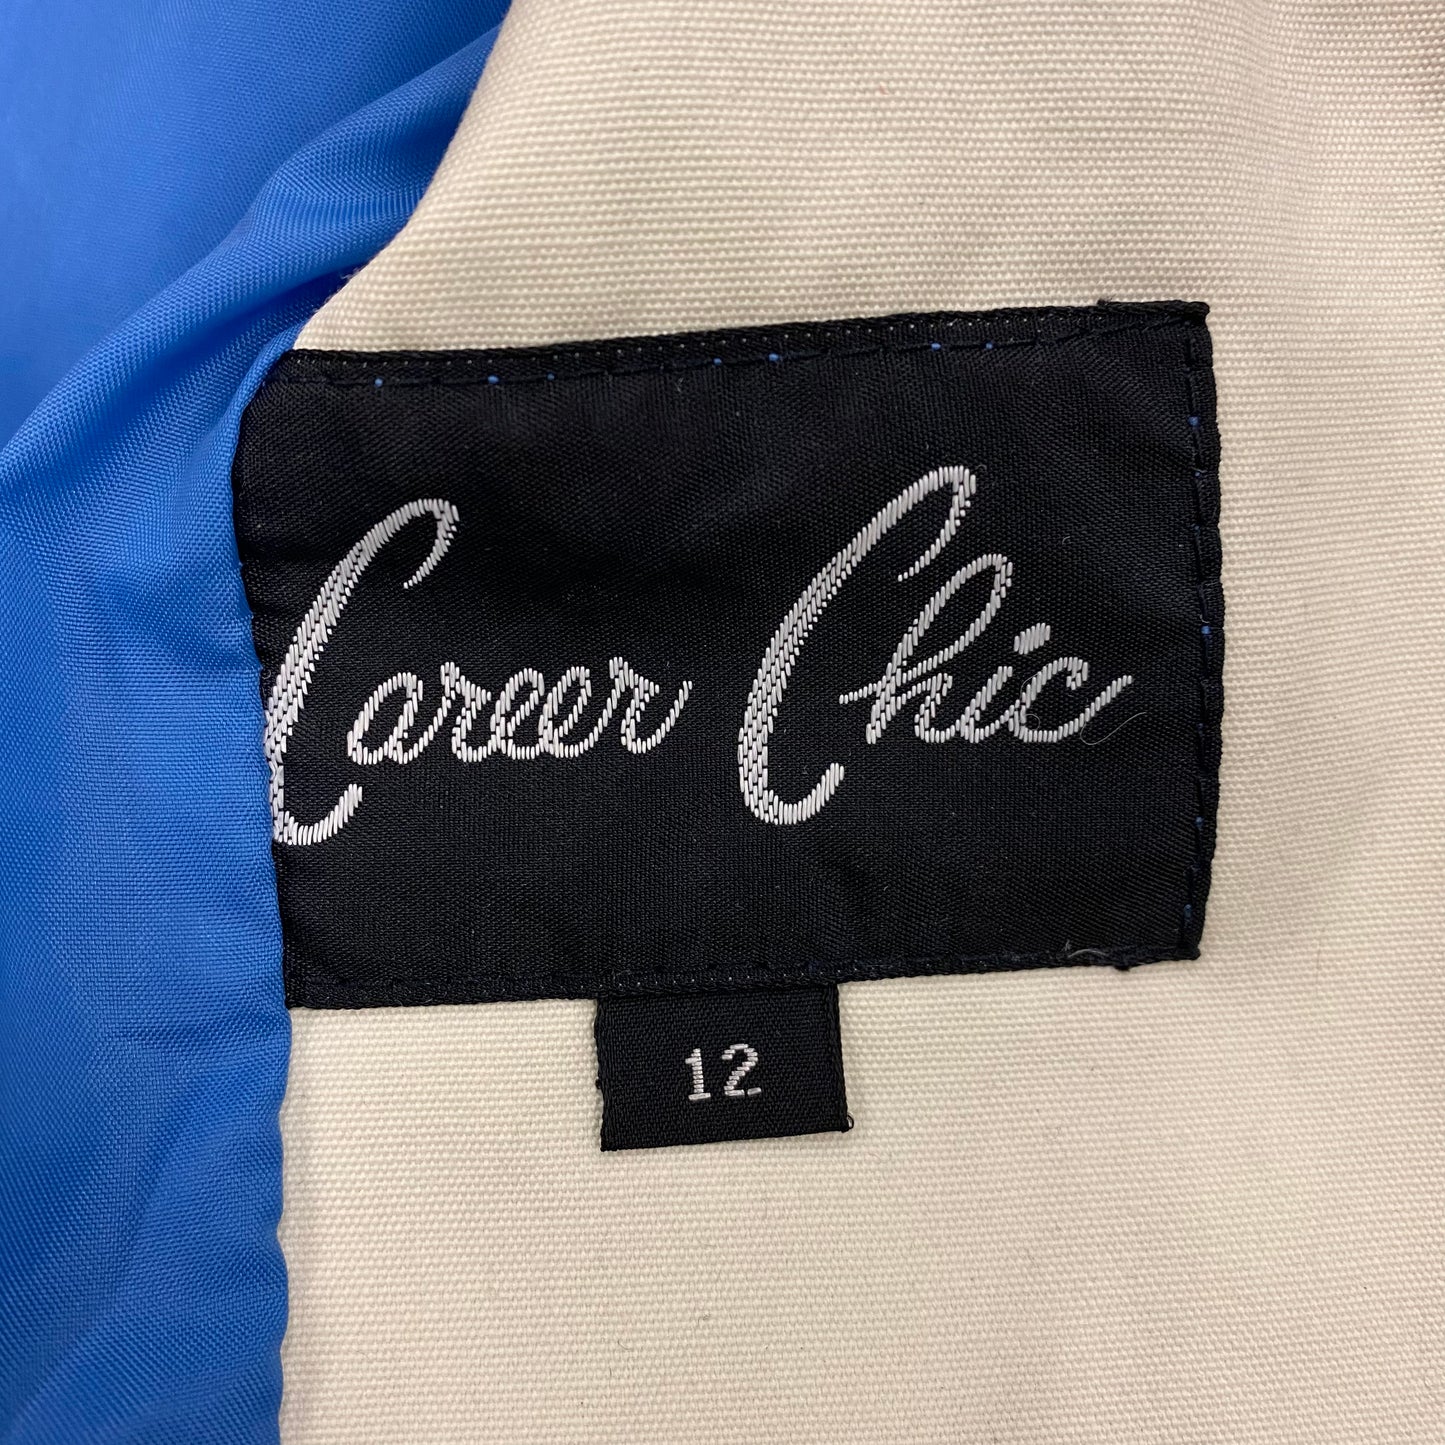 1980s Career Chic Light Blue Over Coat - Size 12 (Medium)